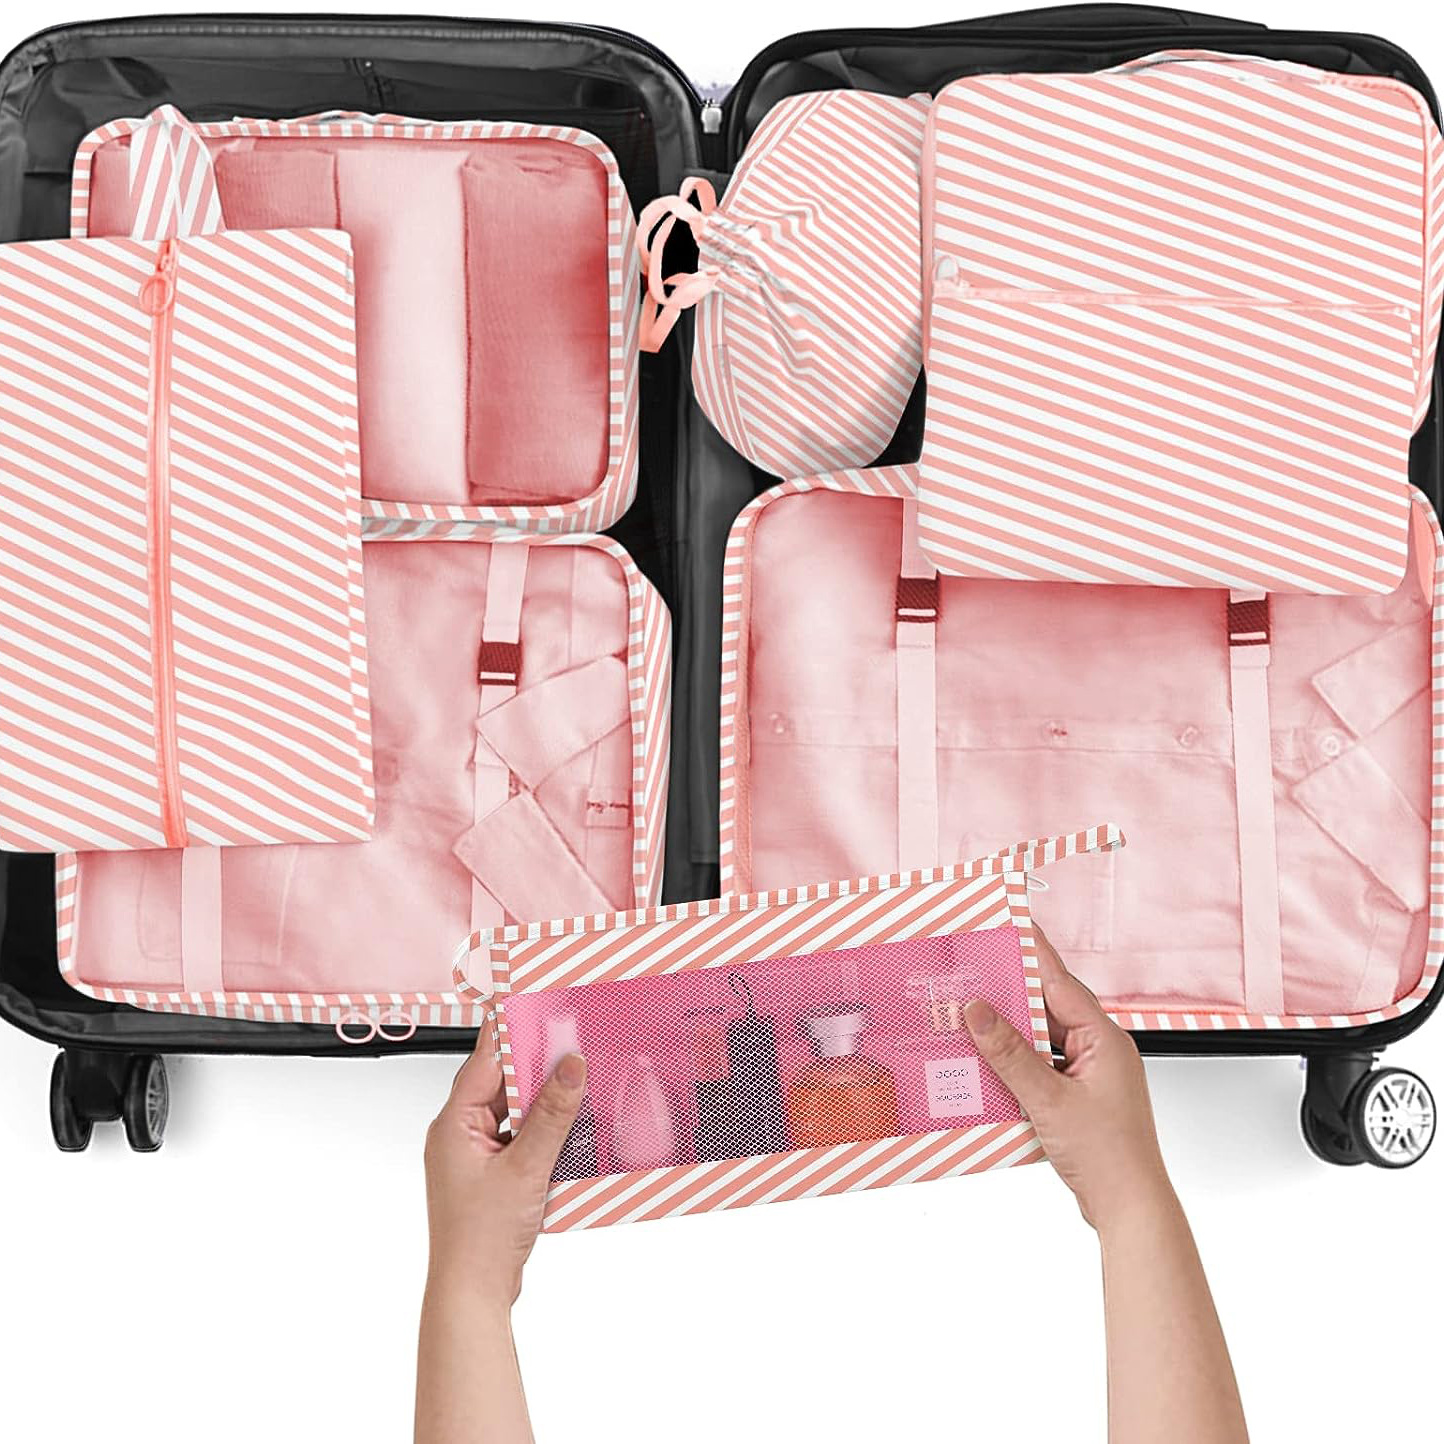 New 8pcs/set Pink Travel Luggage Organizer Bags Suitcase Packing Cubes Set